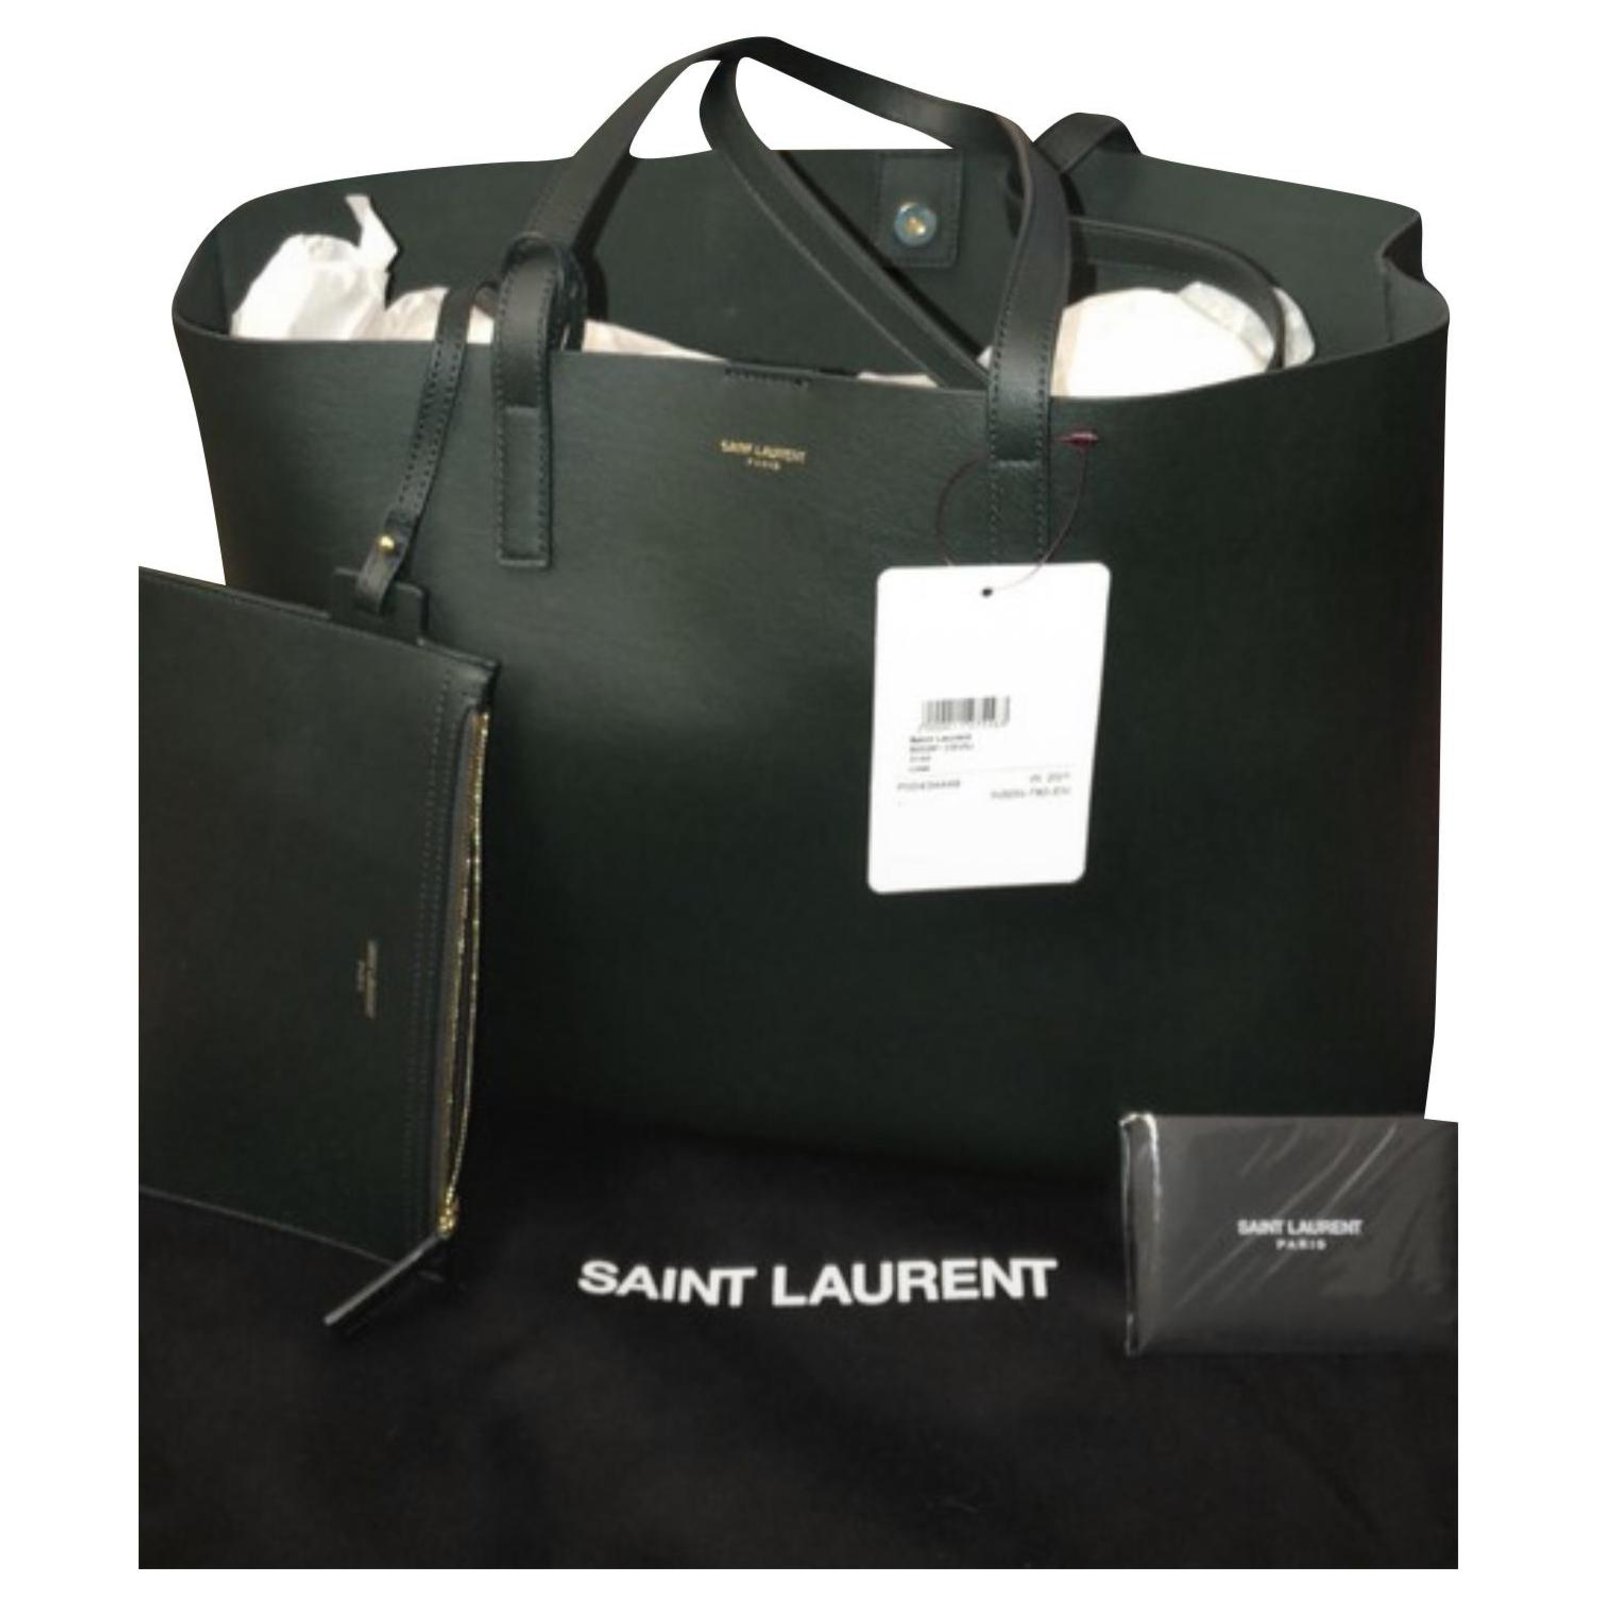 SAINT LAURENT - THE TOY SHOPPING BAG. Available at SAINT LAURENT